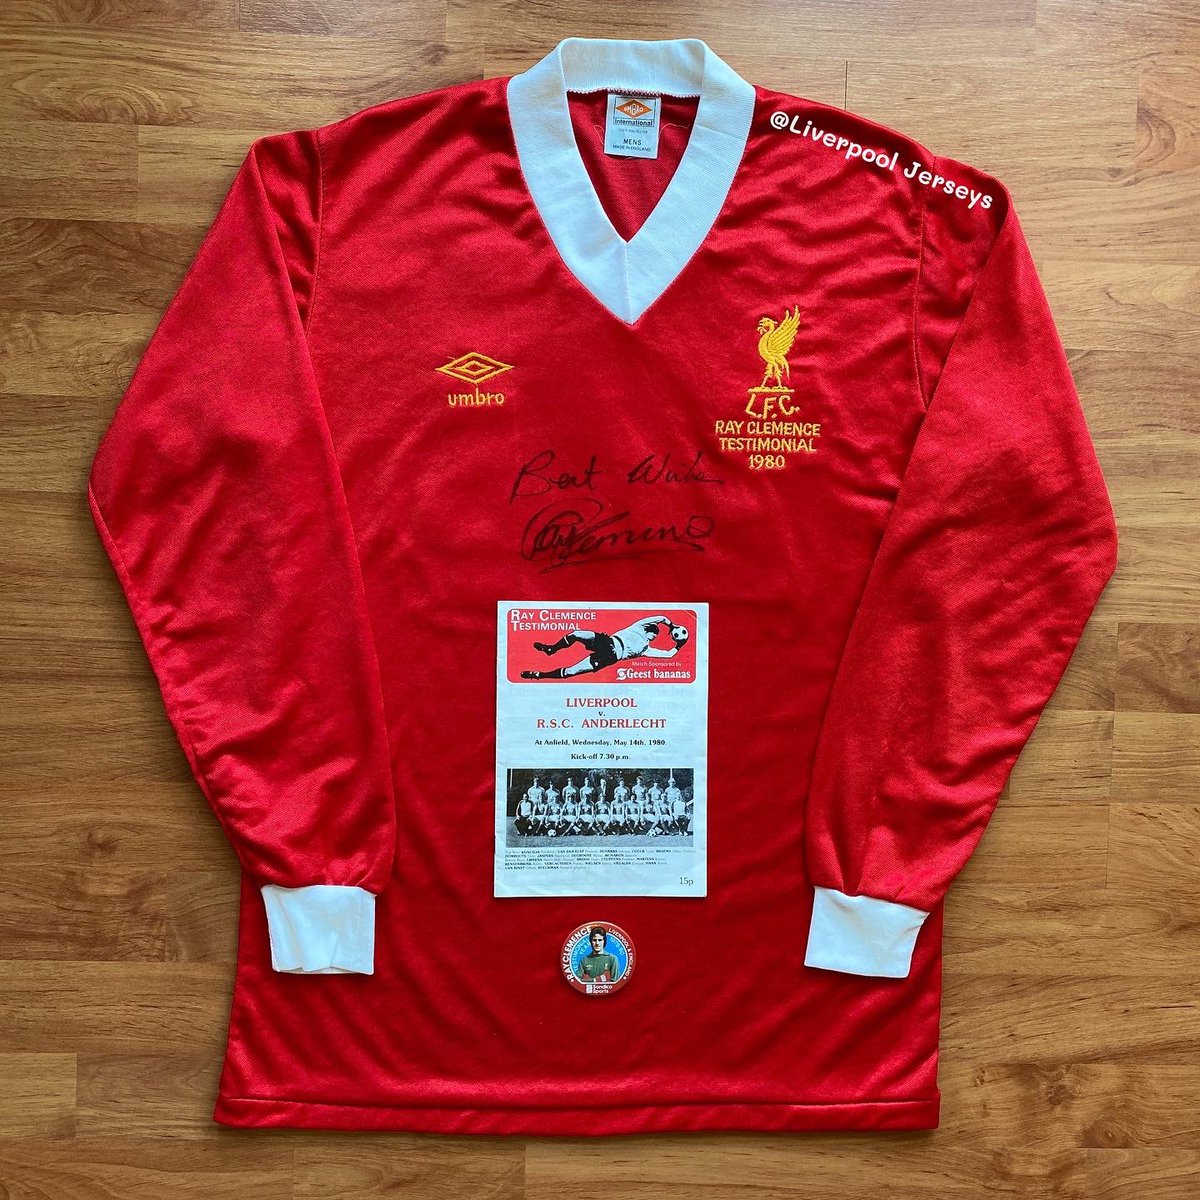 1979-1980 Liverpool Testimonial Ray Clemence Home Player Shirt No. 14 Sammy Lee
#matchworn #matchprepared #matchissued #playershirt #liverpool #liverpoolfc #footballshirtcollection #footballshirtcollector #ynwa #lfc